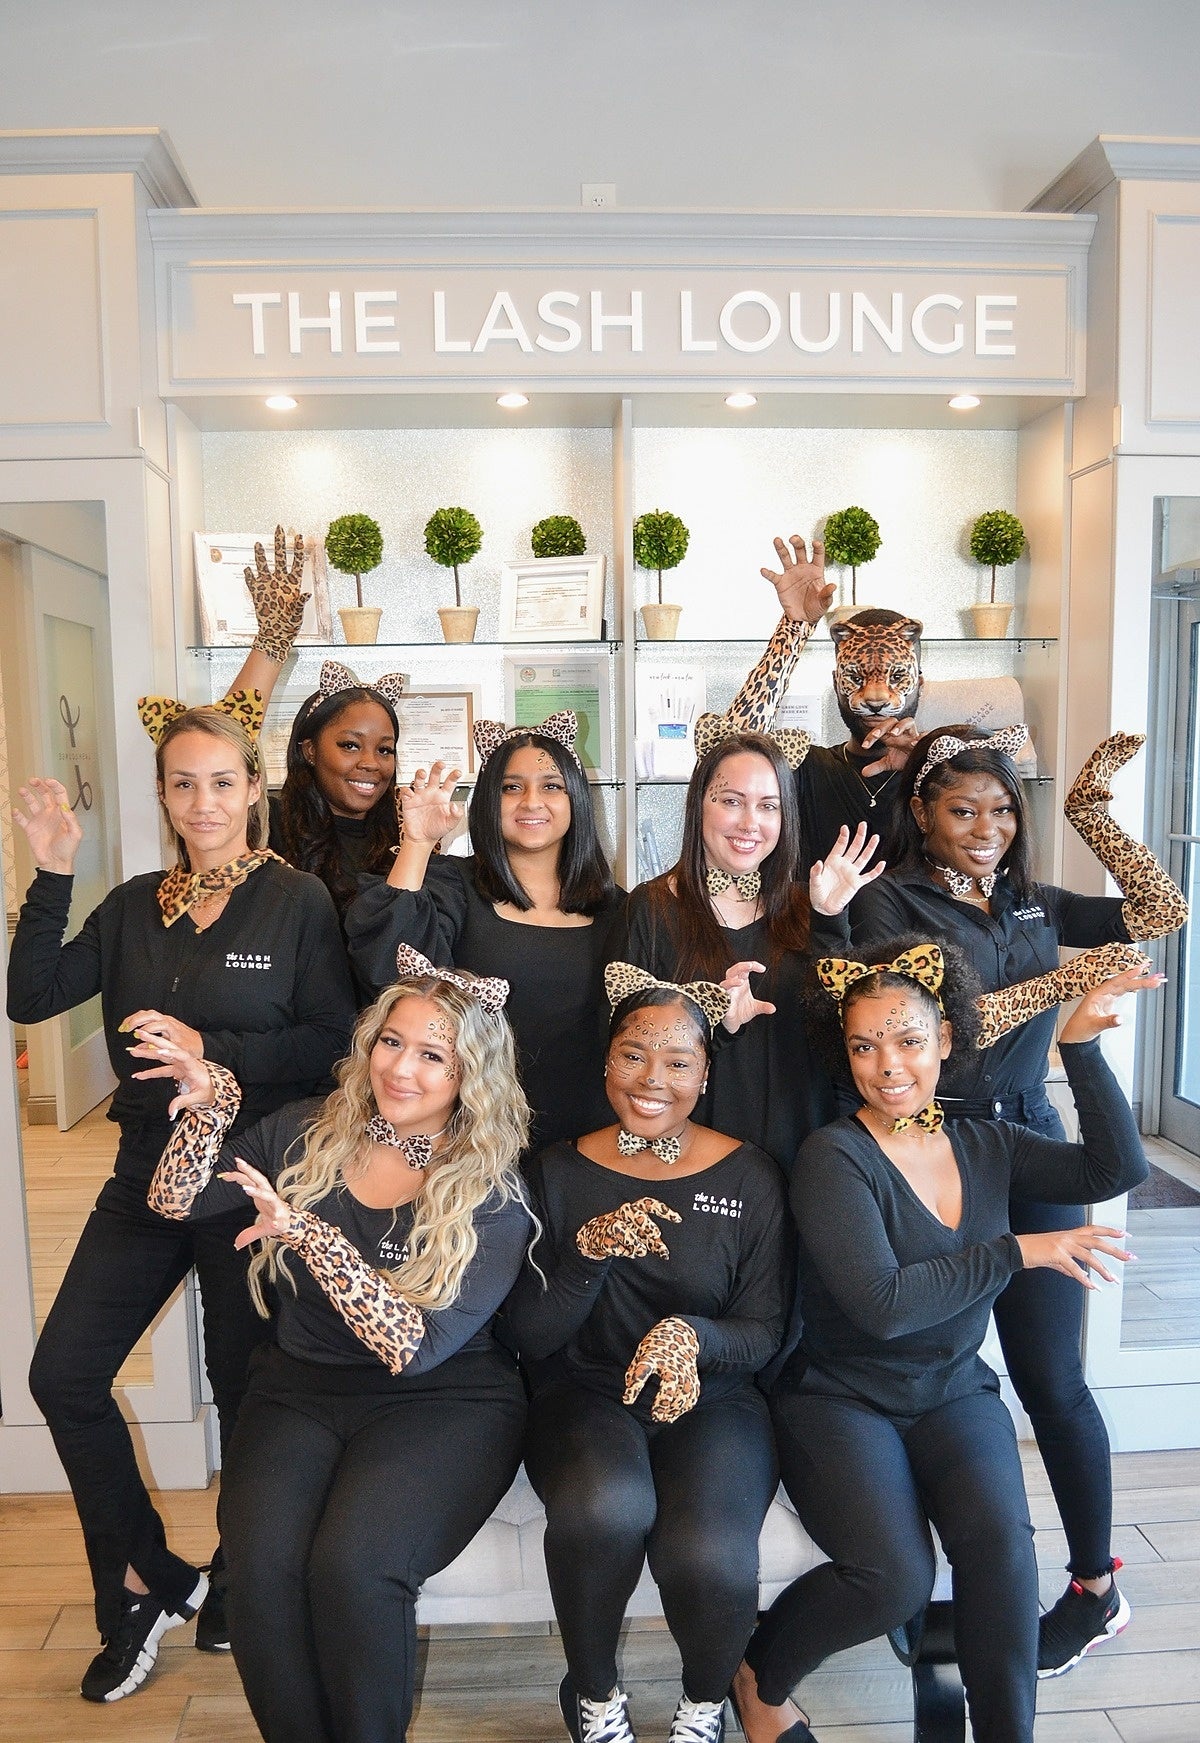 The Lash Lounge Pembroke Pines – Pines and Flamingo team members inside the salon